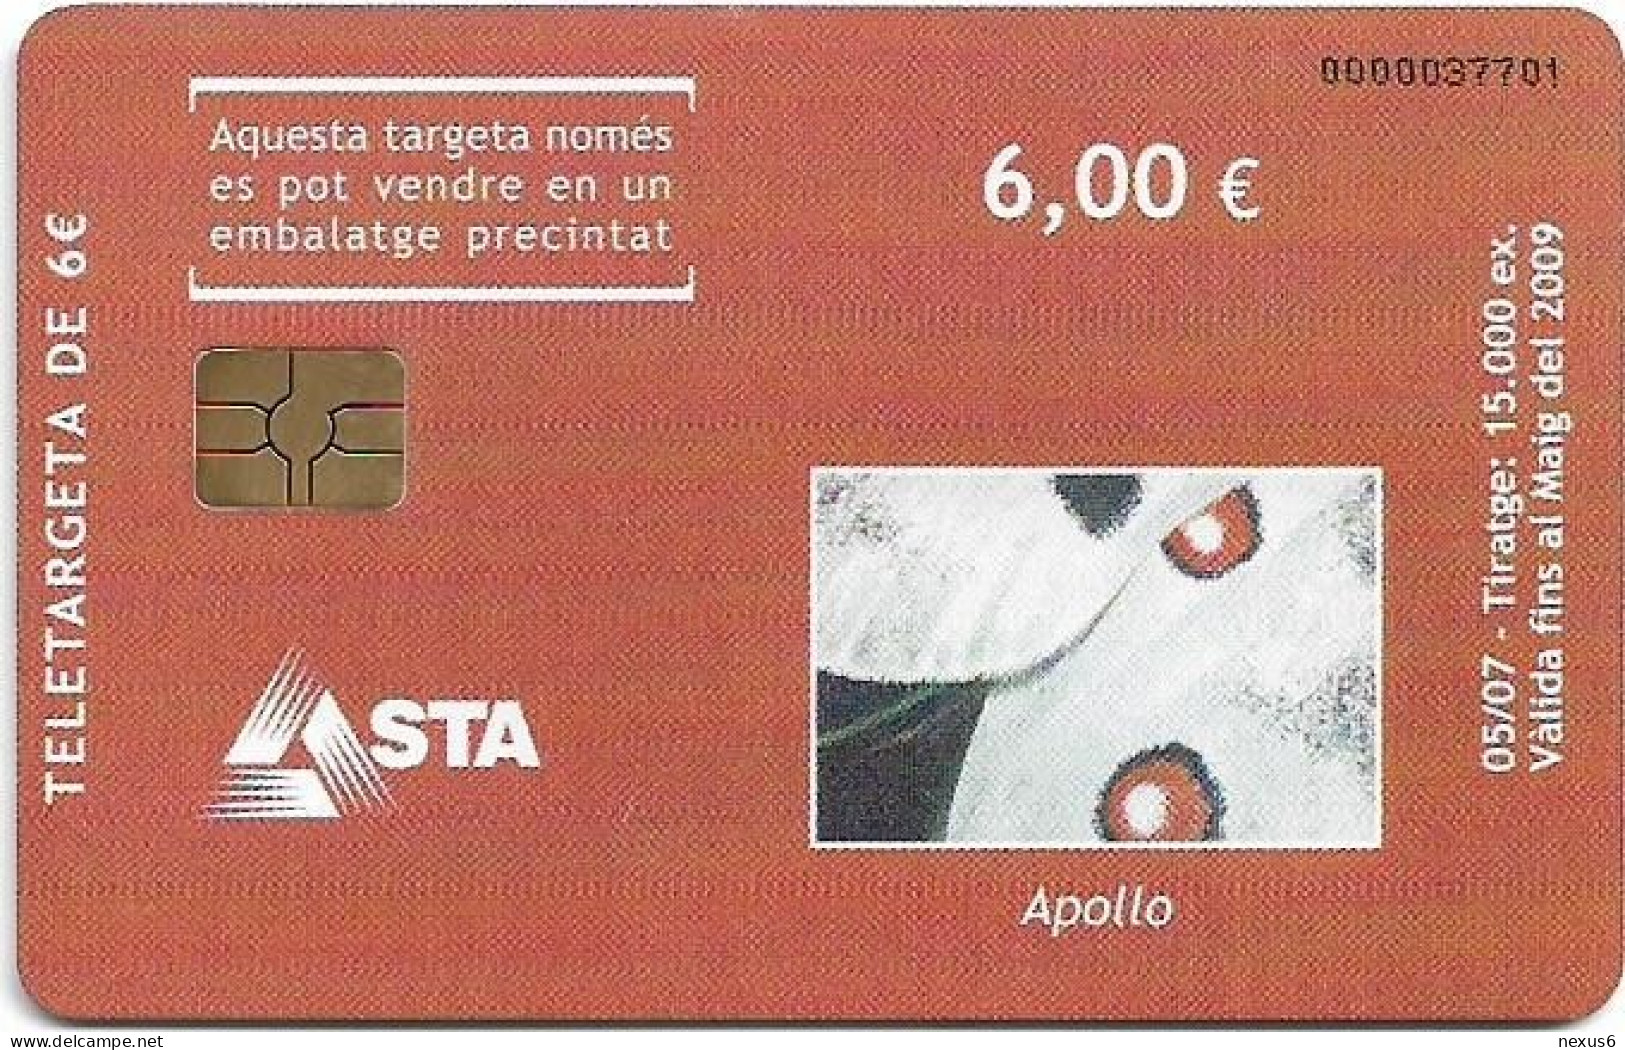 Andorra - STA - STA-0157 - Parnasius Apollo Butterfly, Gem5 Red, 05.2007, 6€, 15.000ex, Used - Andorra